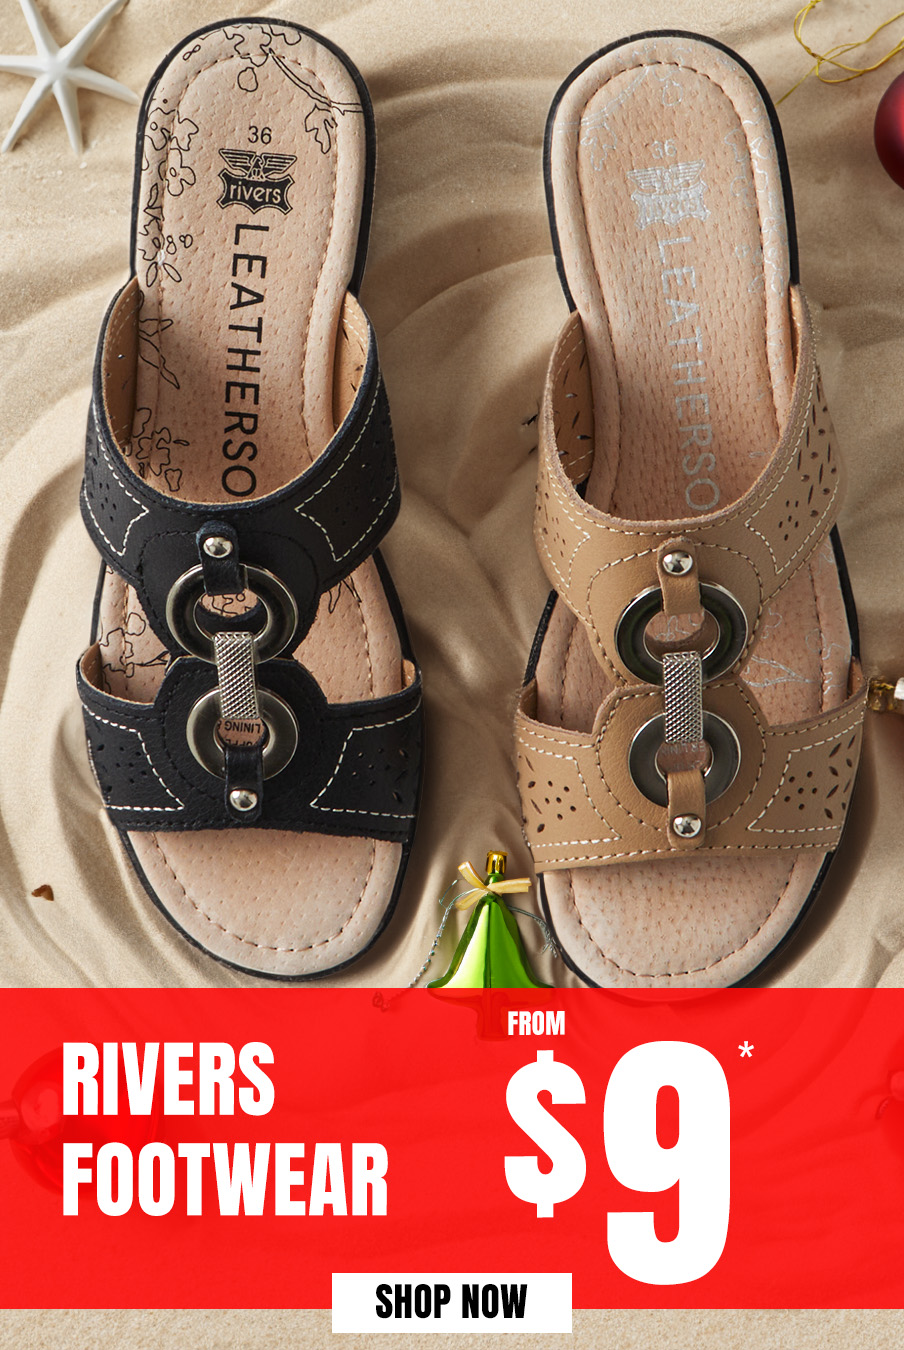 Rivers Footwear From $9*